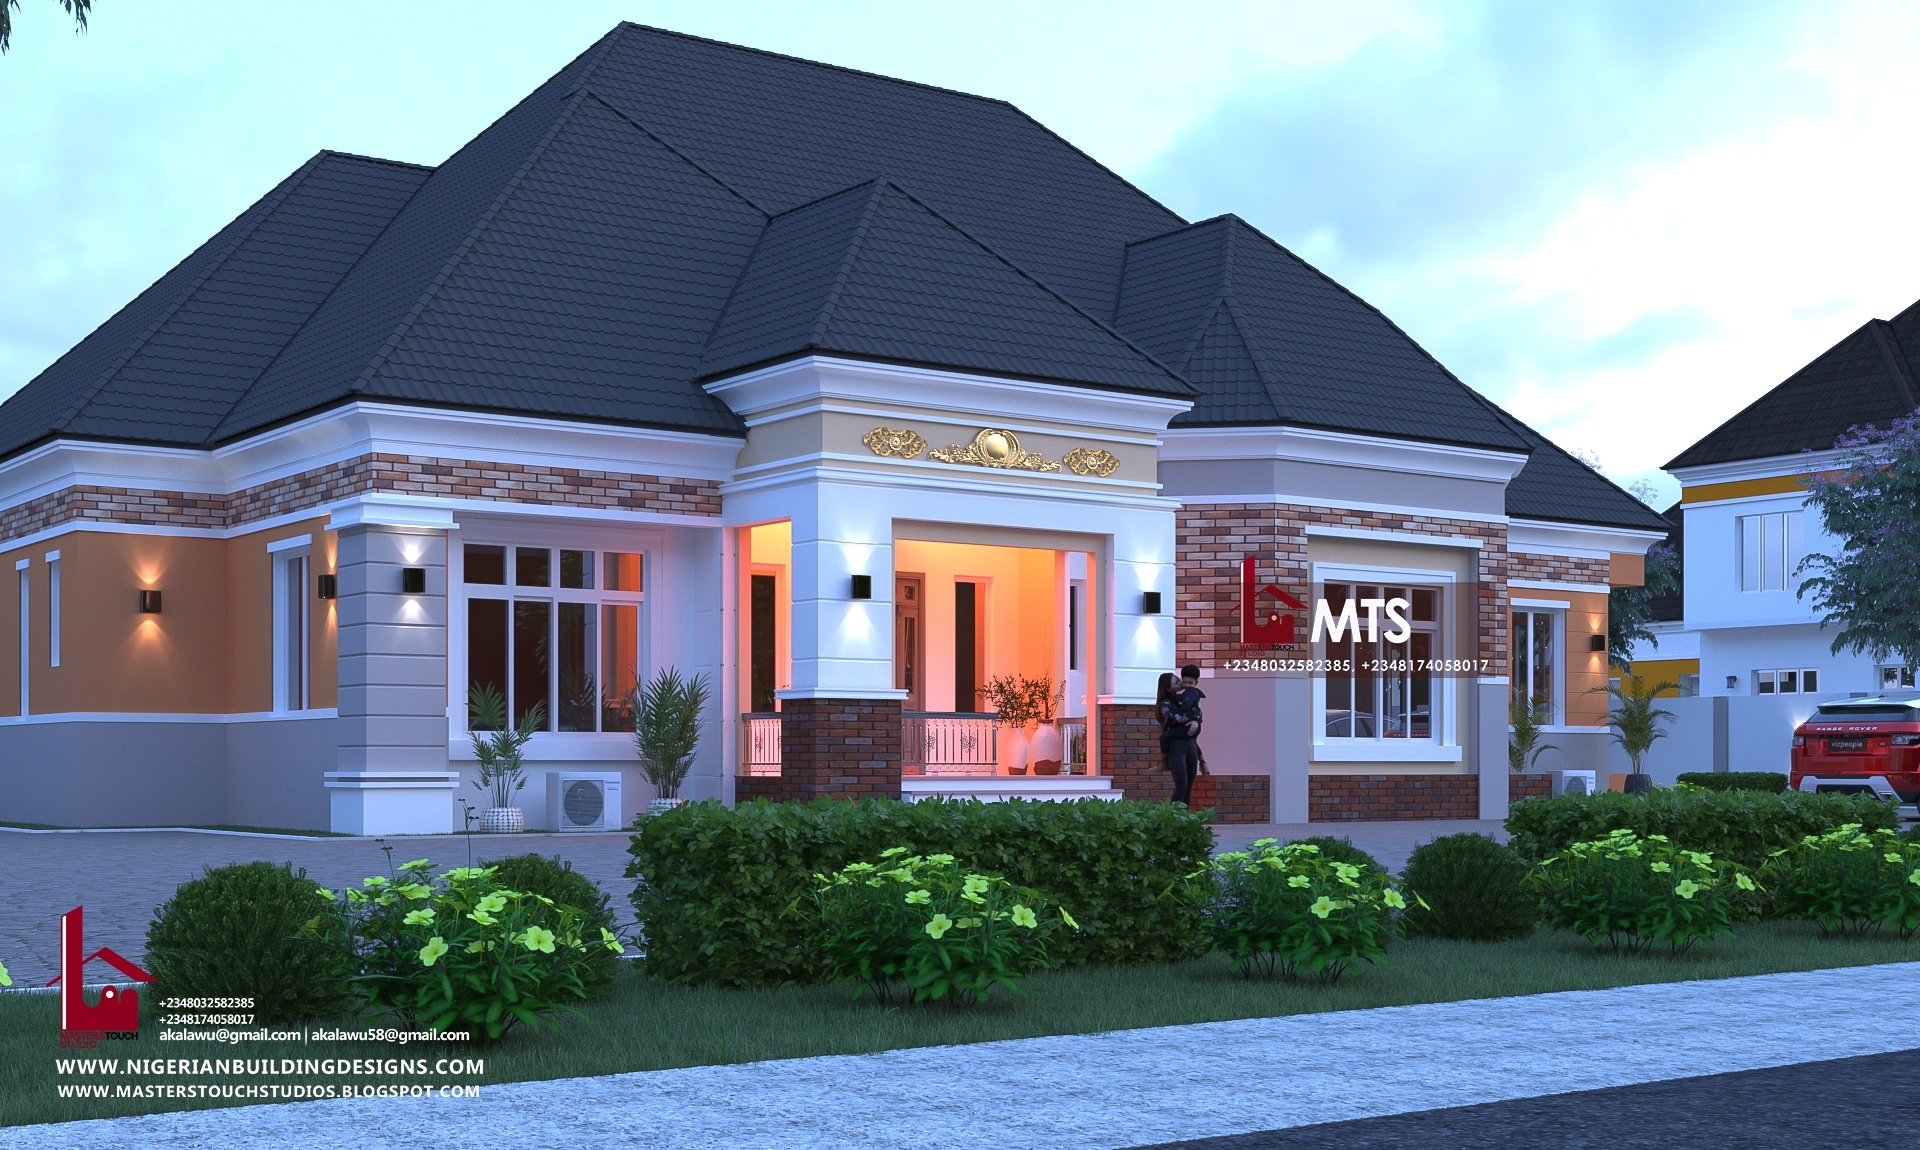 Amazing 4 bedroom bungalow (rf 4028) nigerian building designs regarding inspirational the best house in nigeria